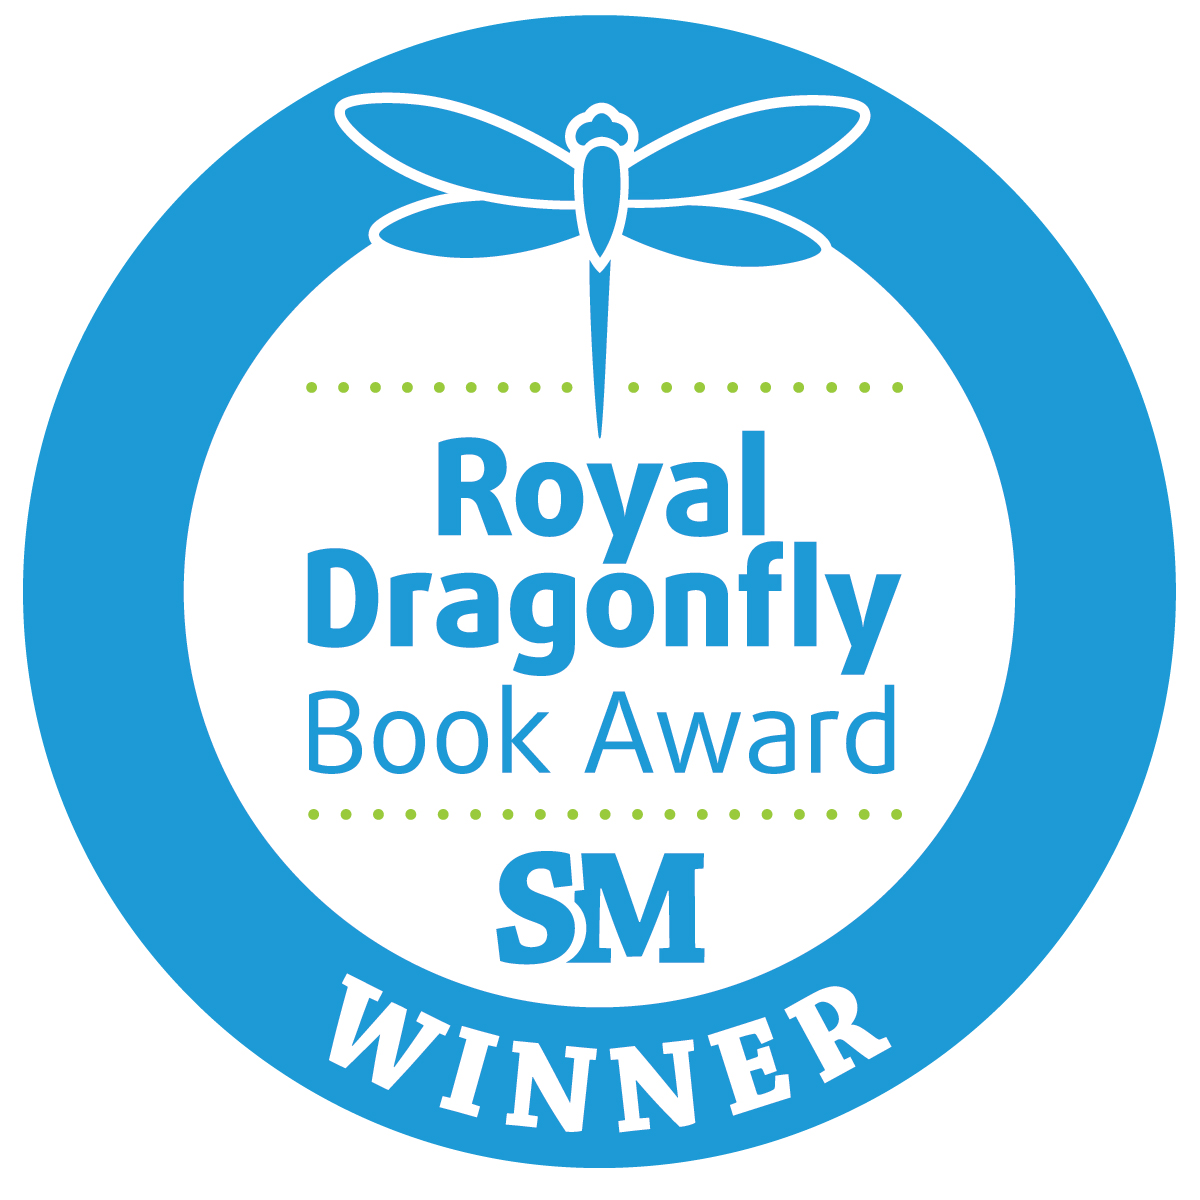 //candywrapper.co/wp-content/uploads/2019/10/Royal-Dragonfly-Award-Seal.png